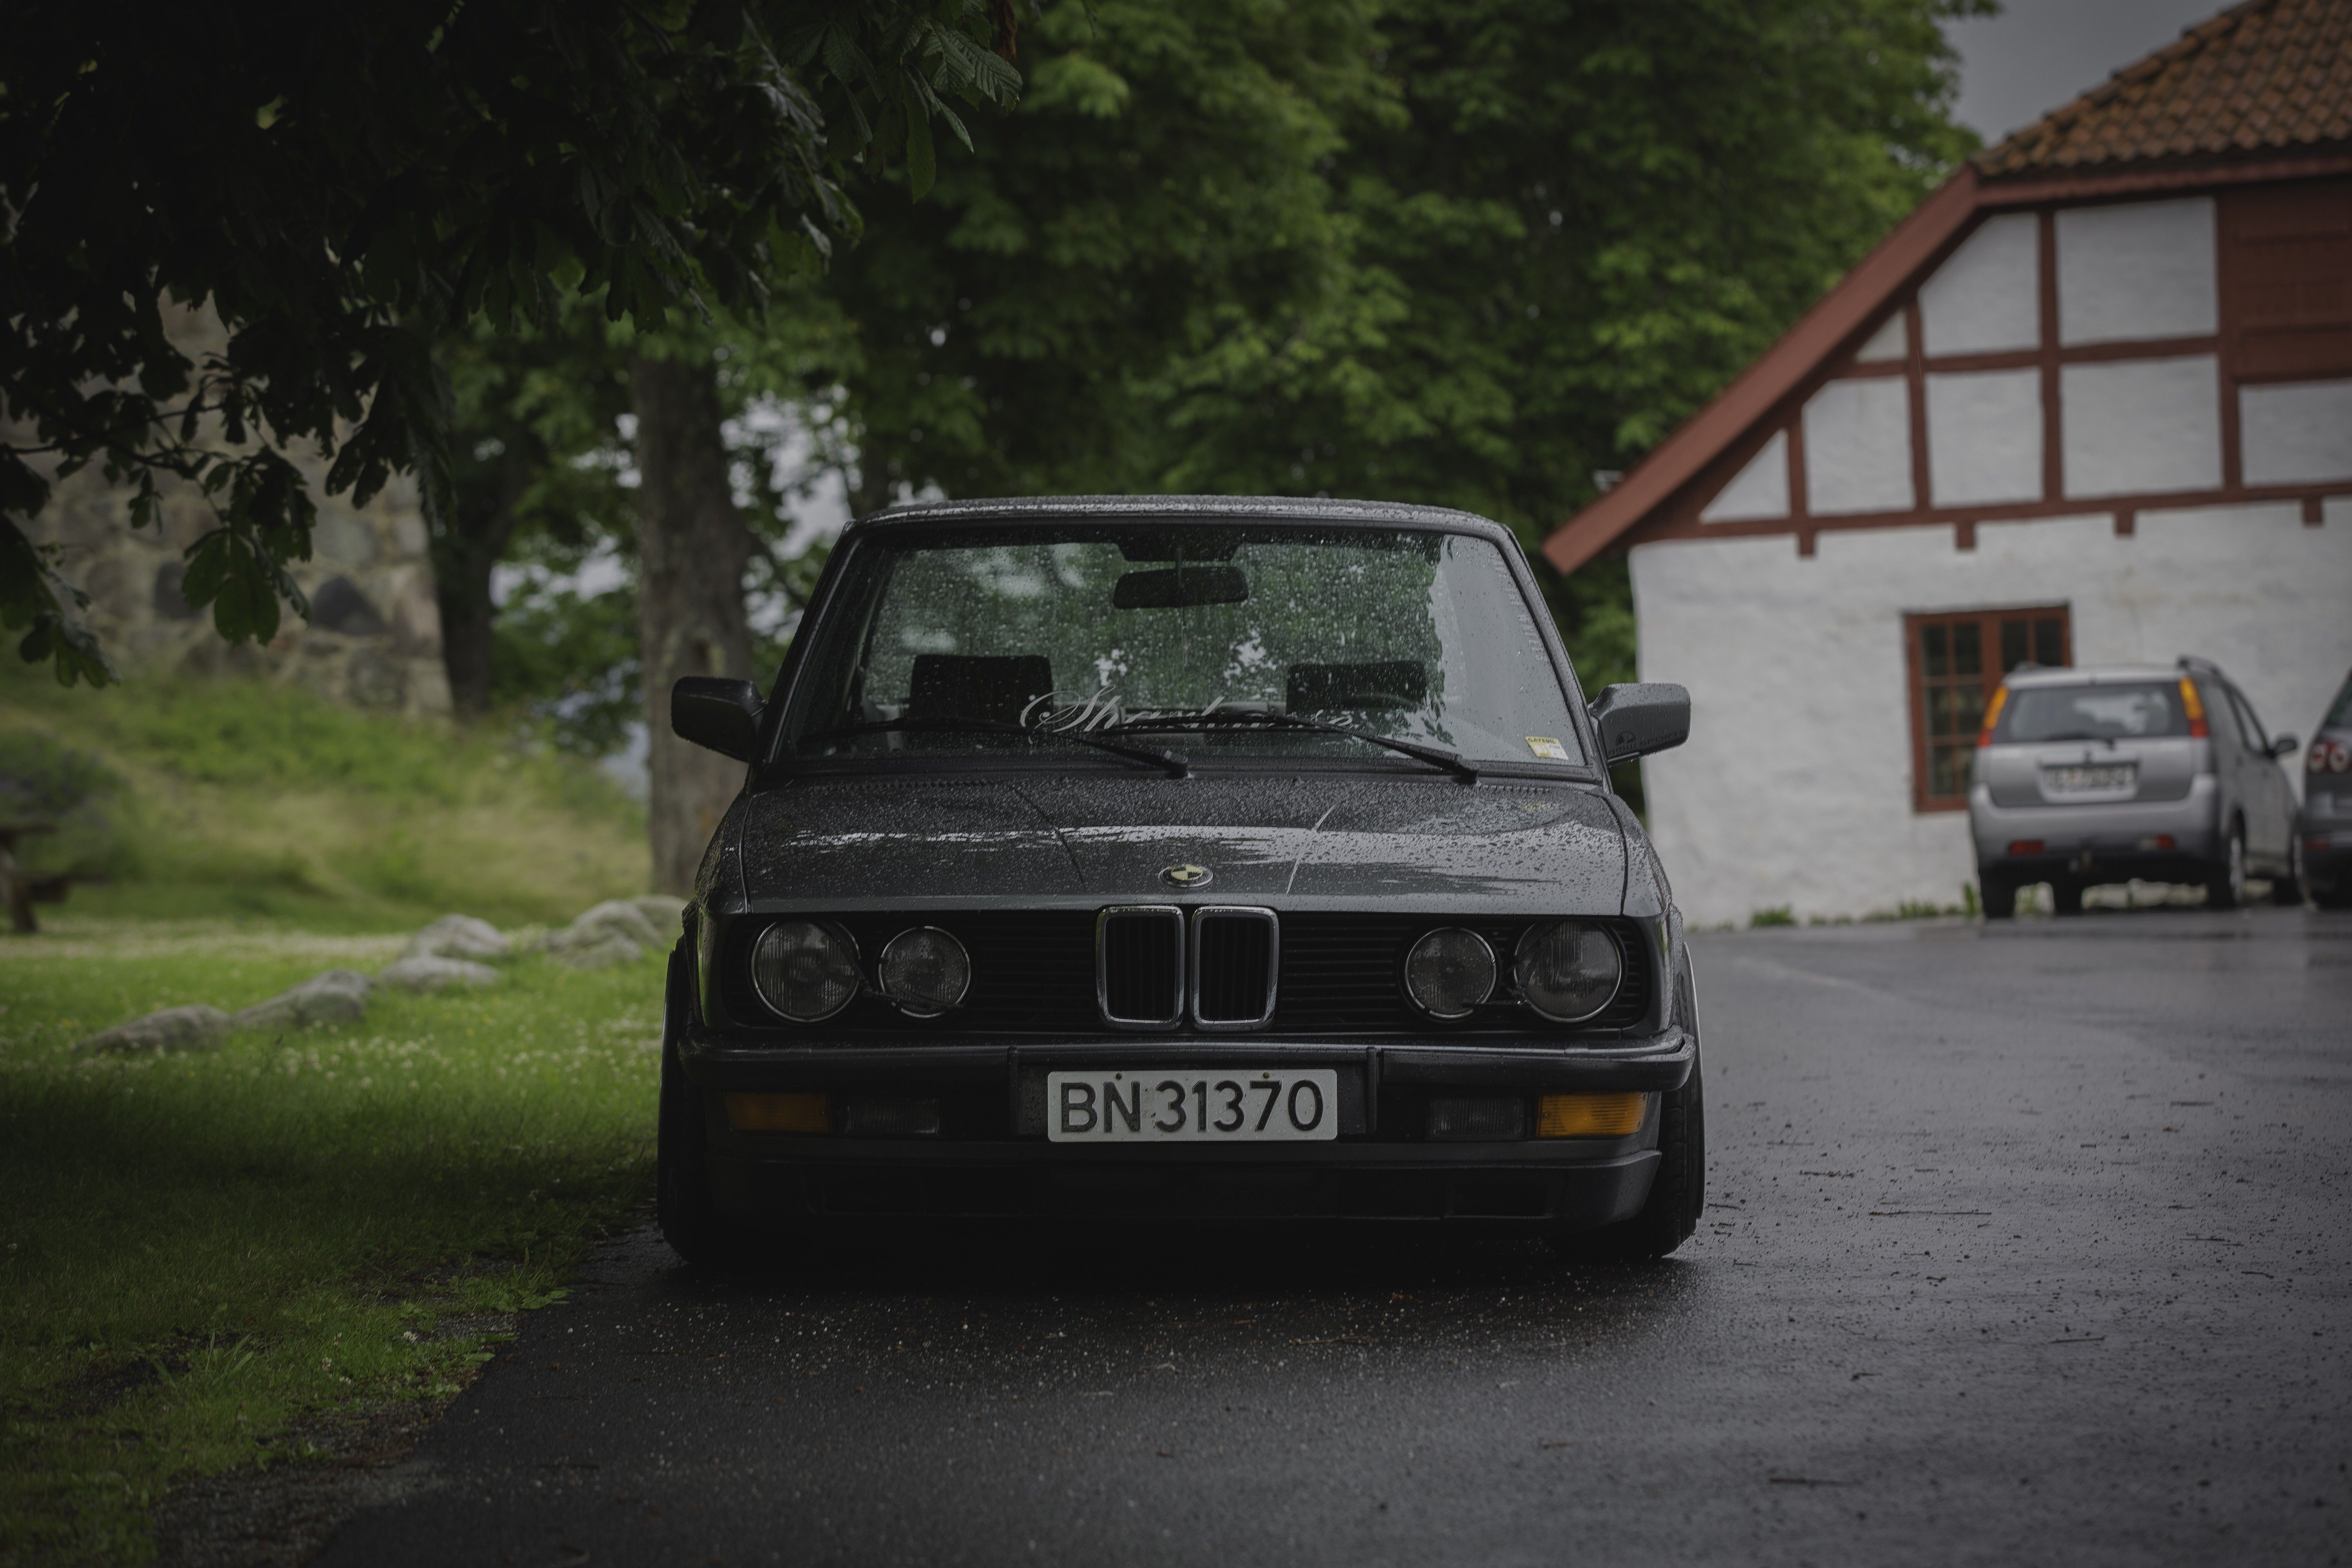 BMW E Stance, Stanceworks, Savethewheels, Static, Norway